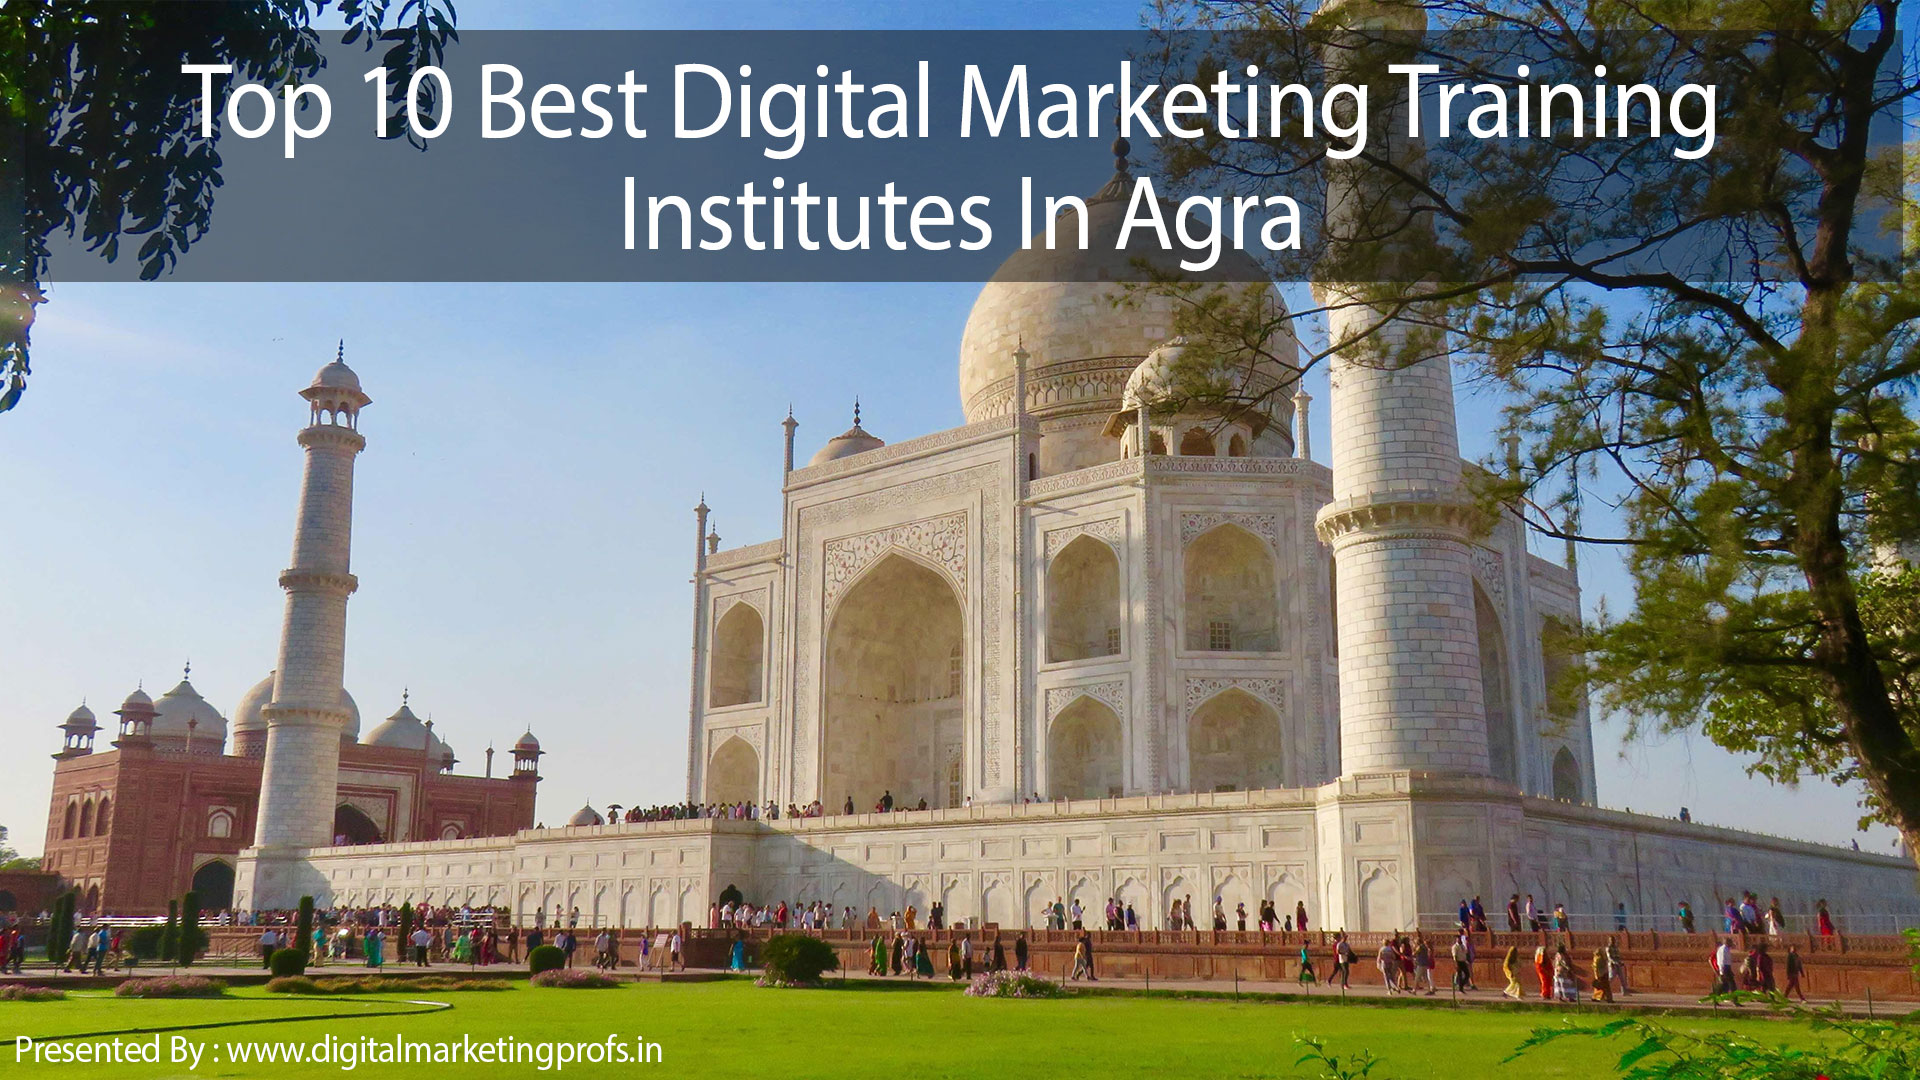 Top-10-Best-Digital-Marketing-Training-Institutes-In-Agra